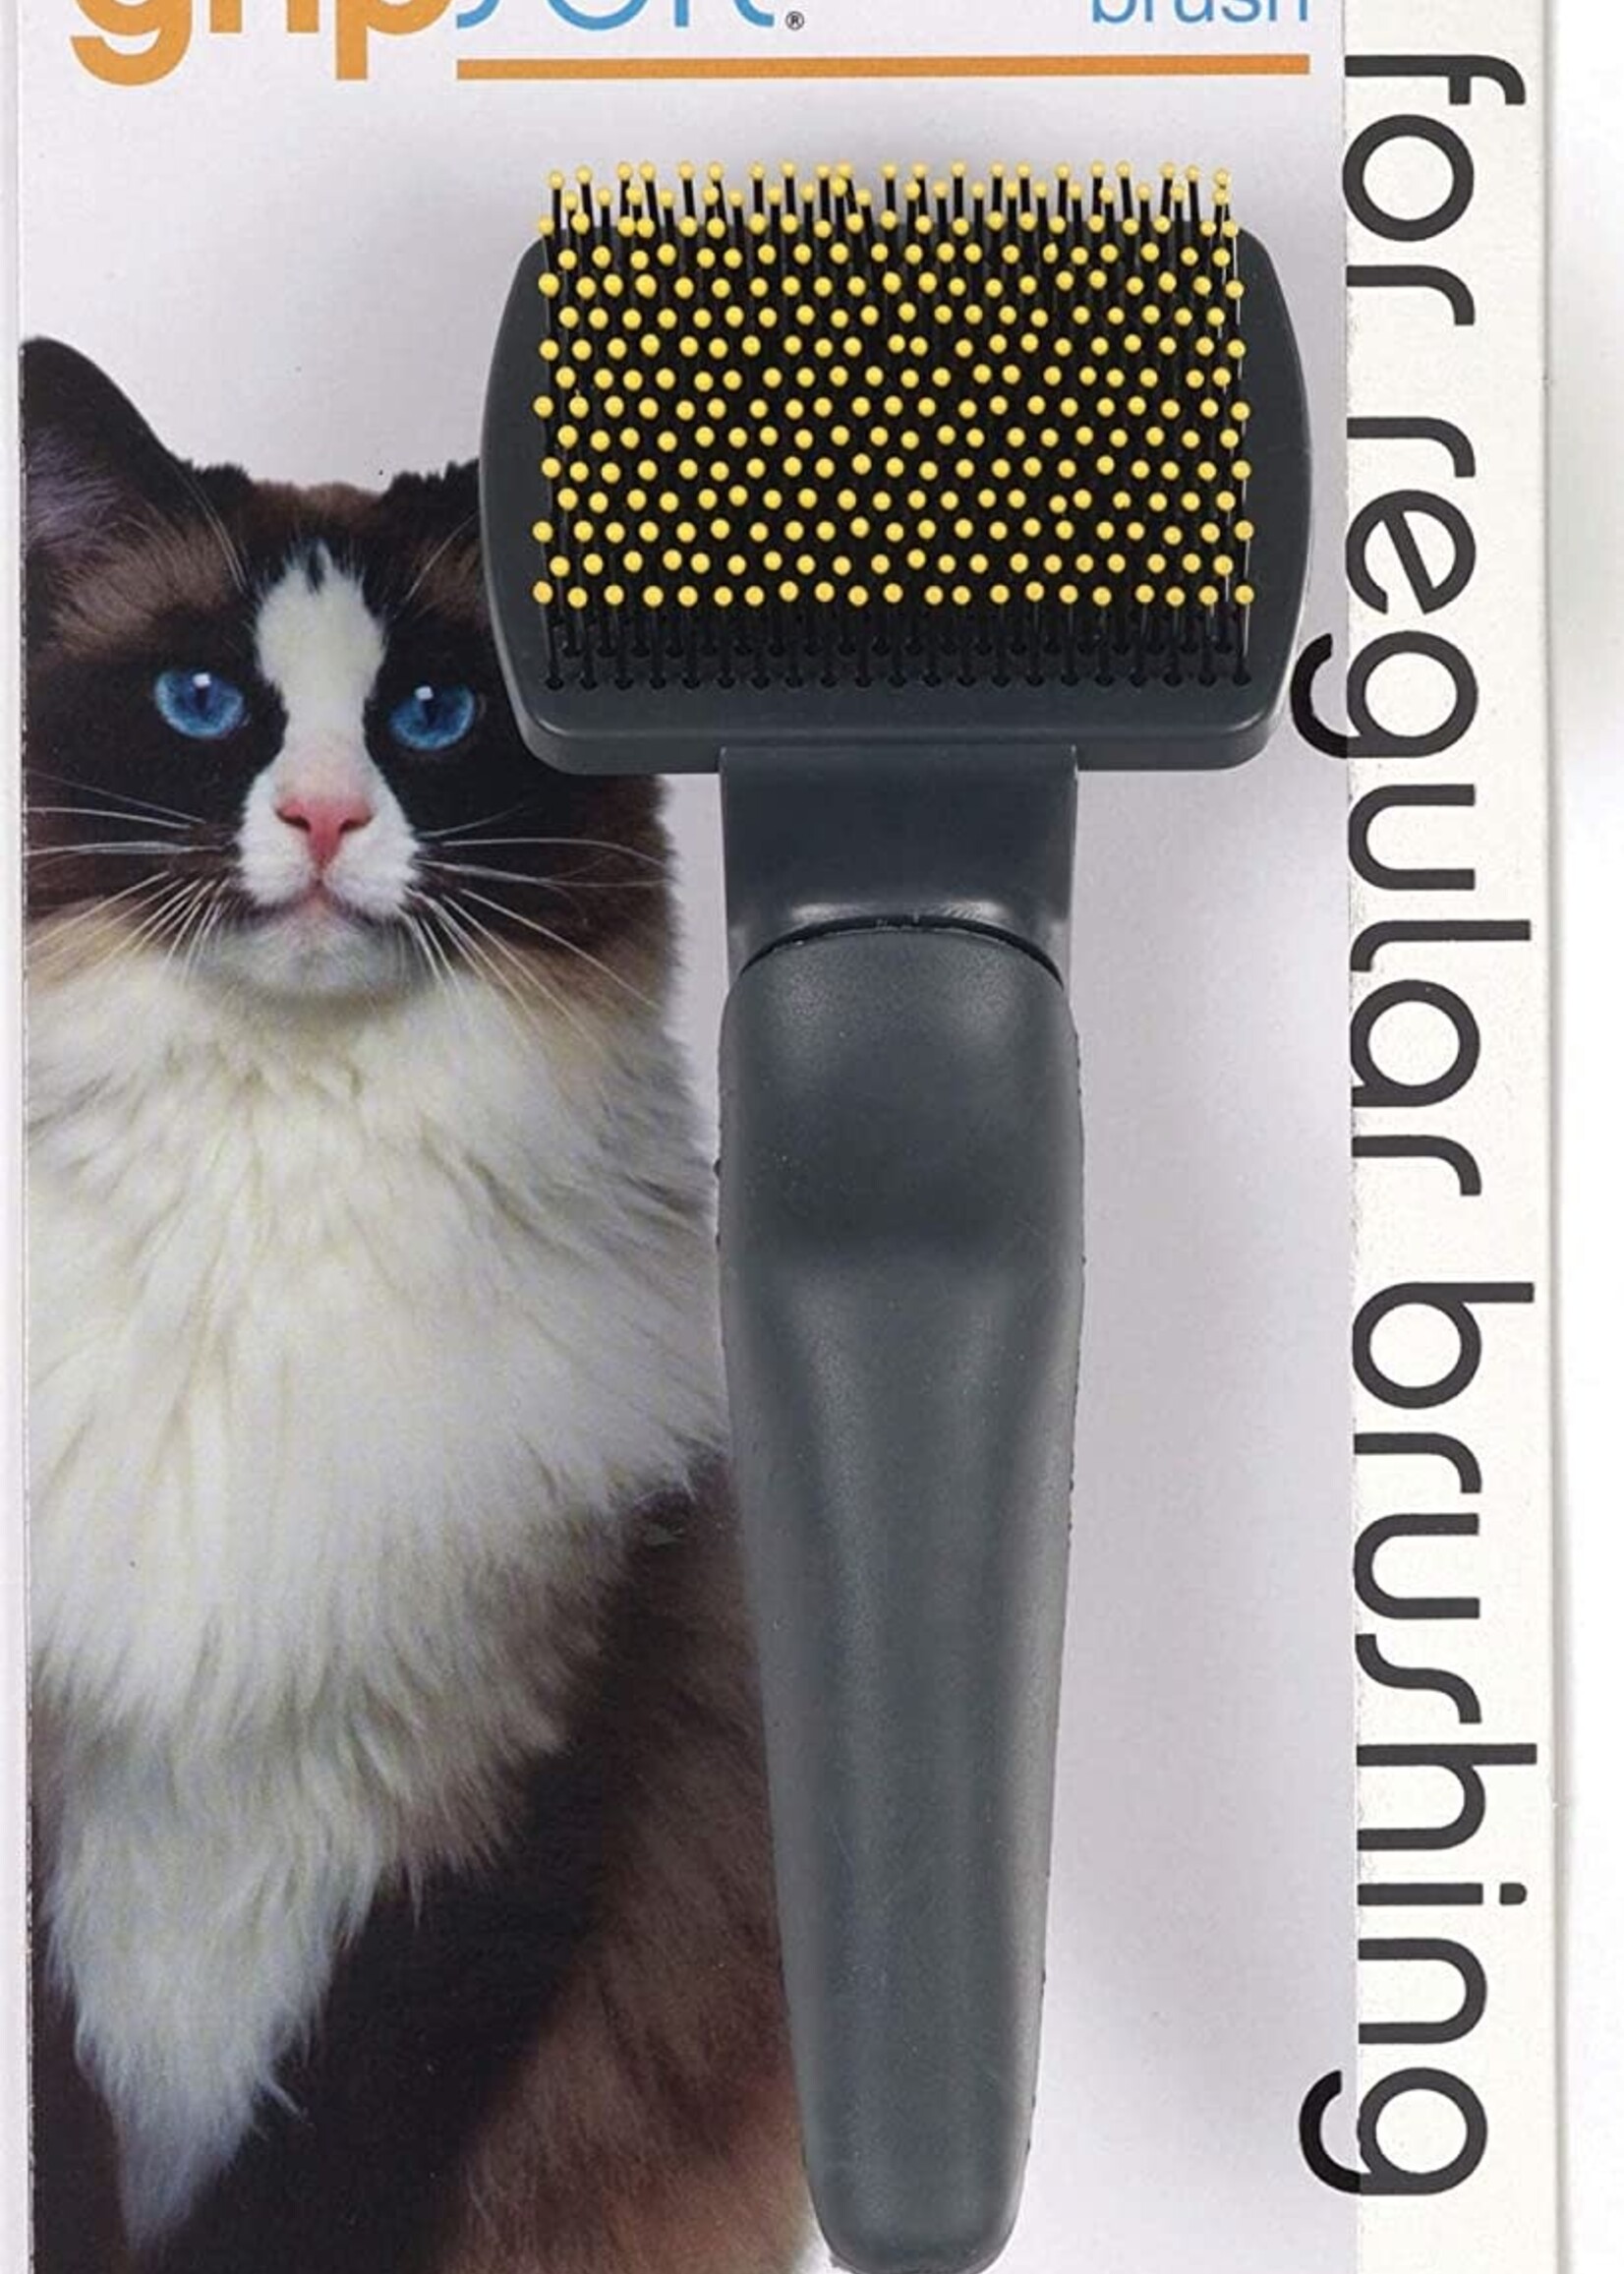 JW Pet JW Pet GripSoft Cat Brush